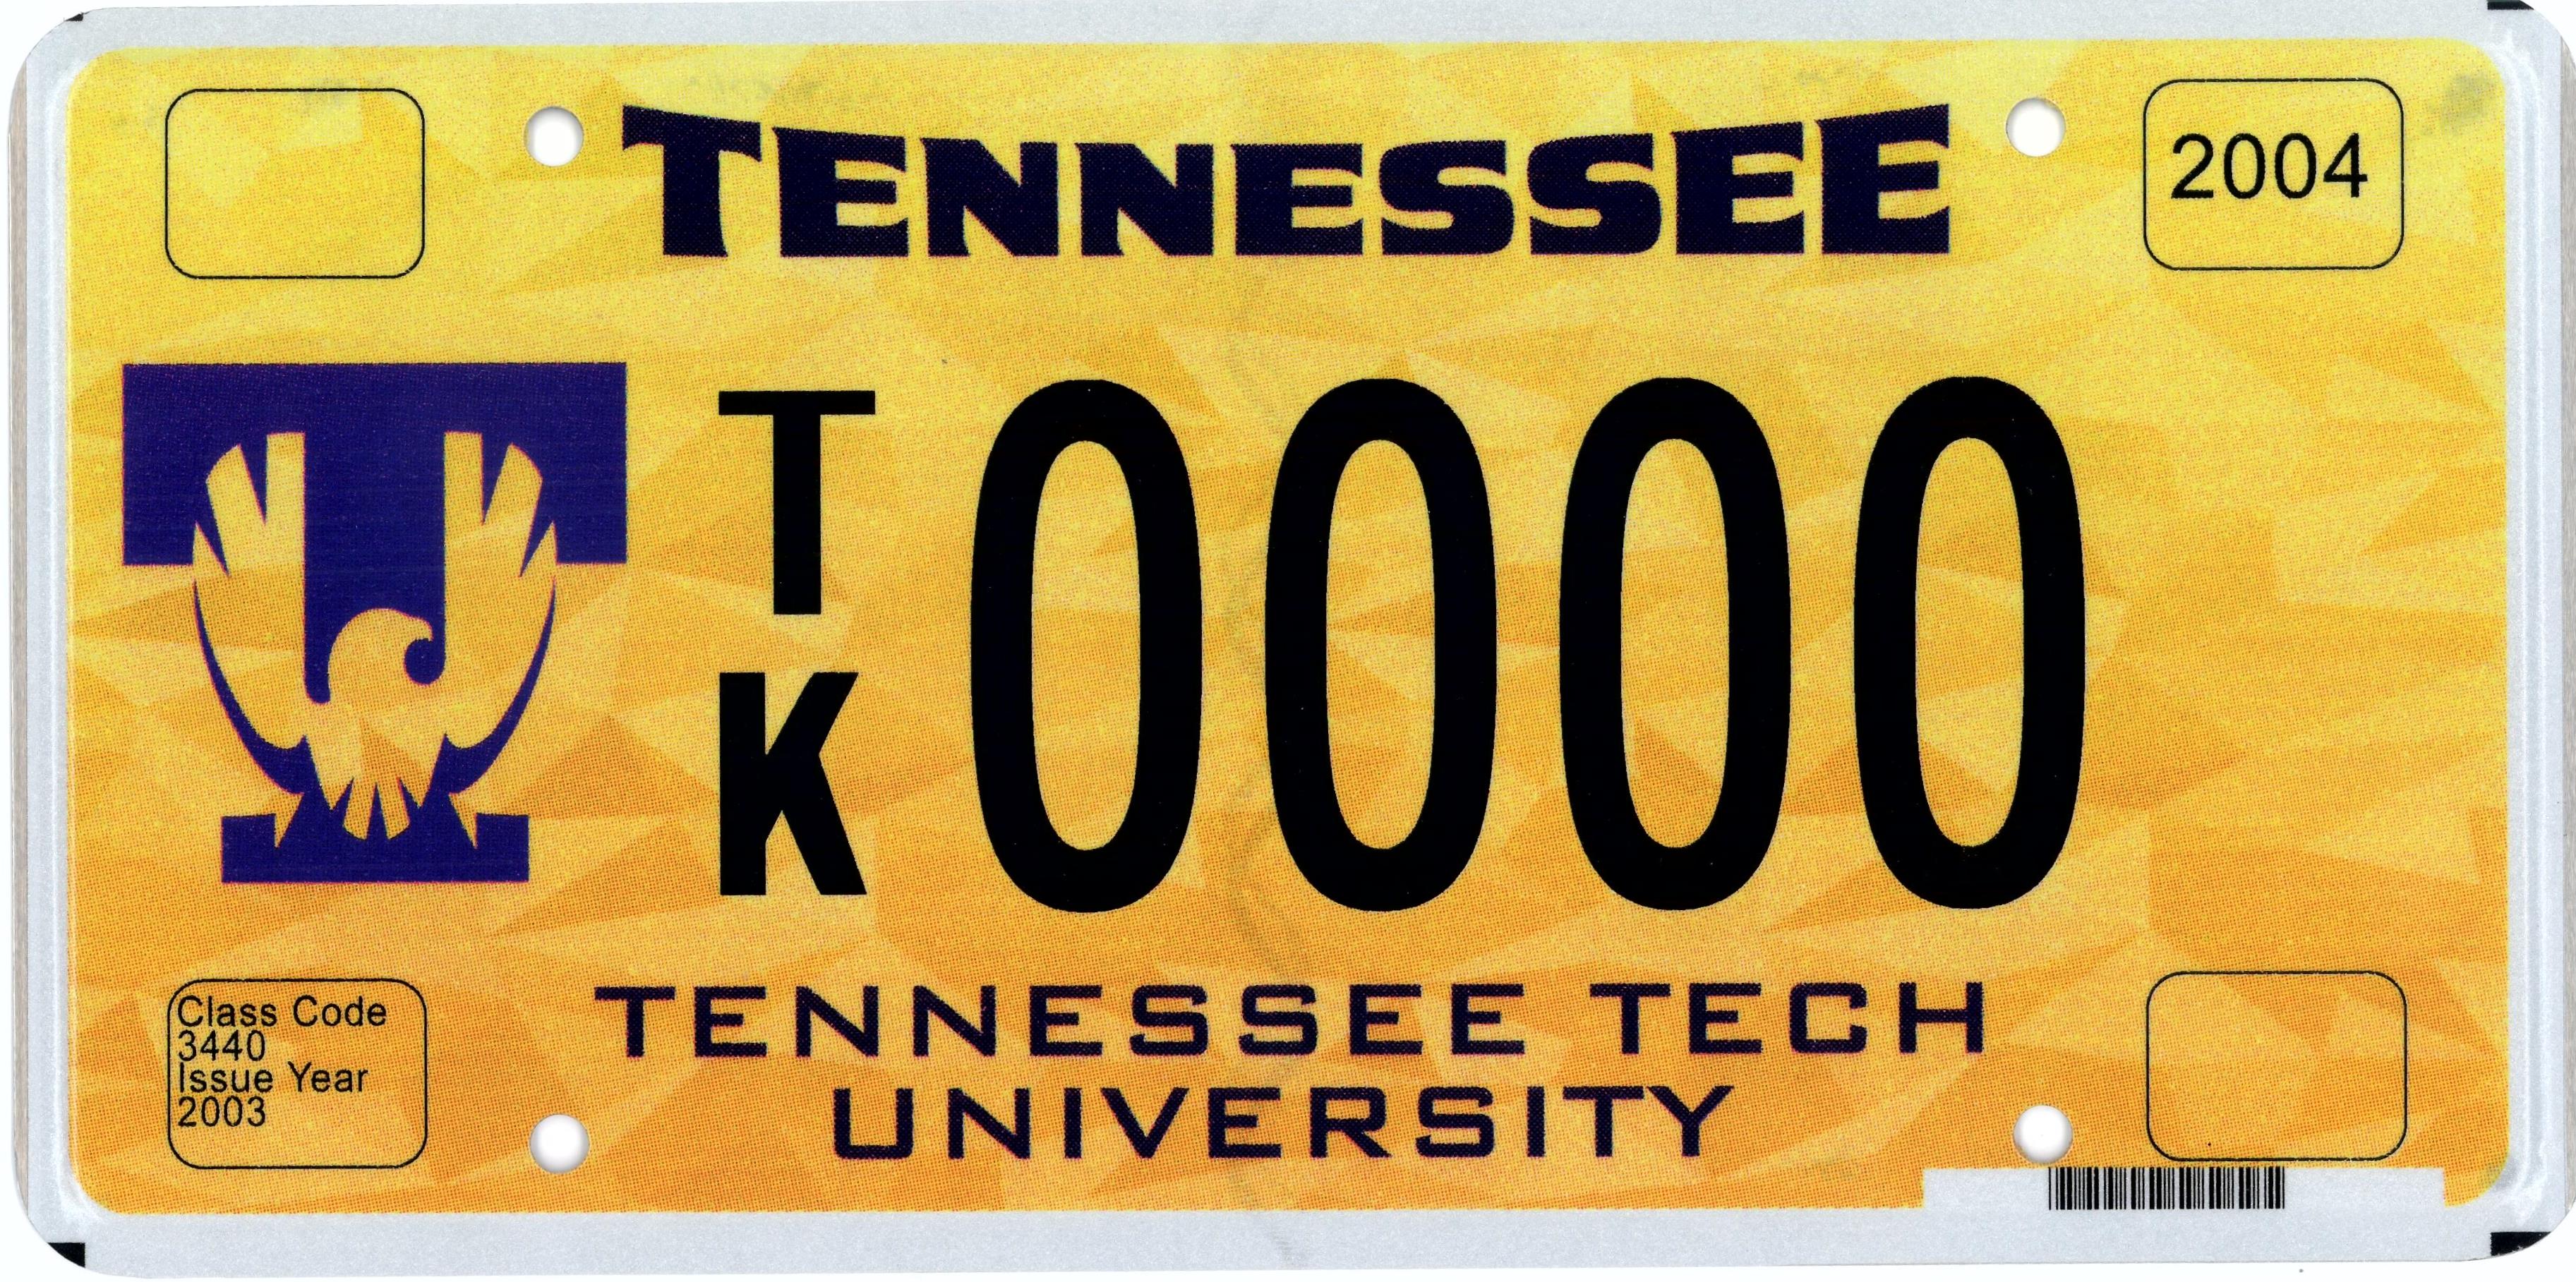 Tennessee_Tech_University_cls_3440.jpg